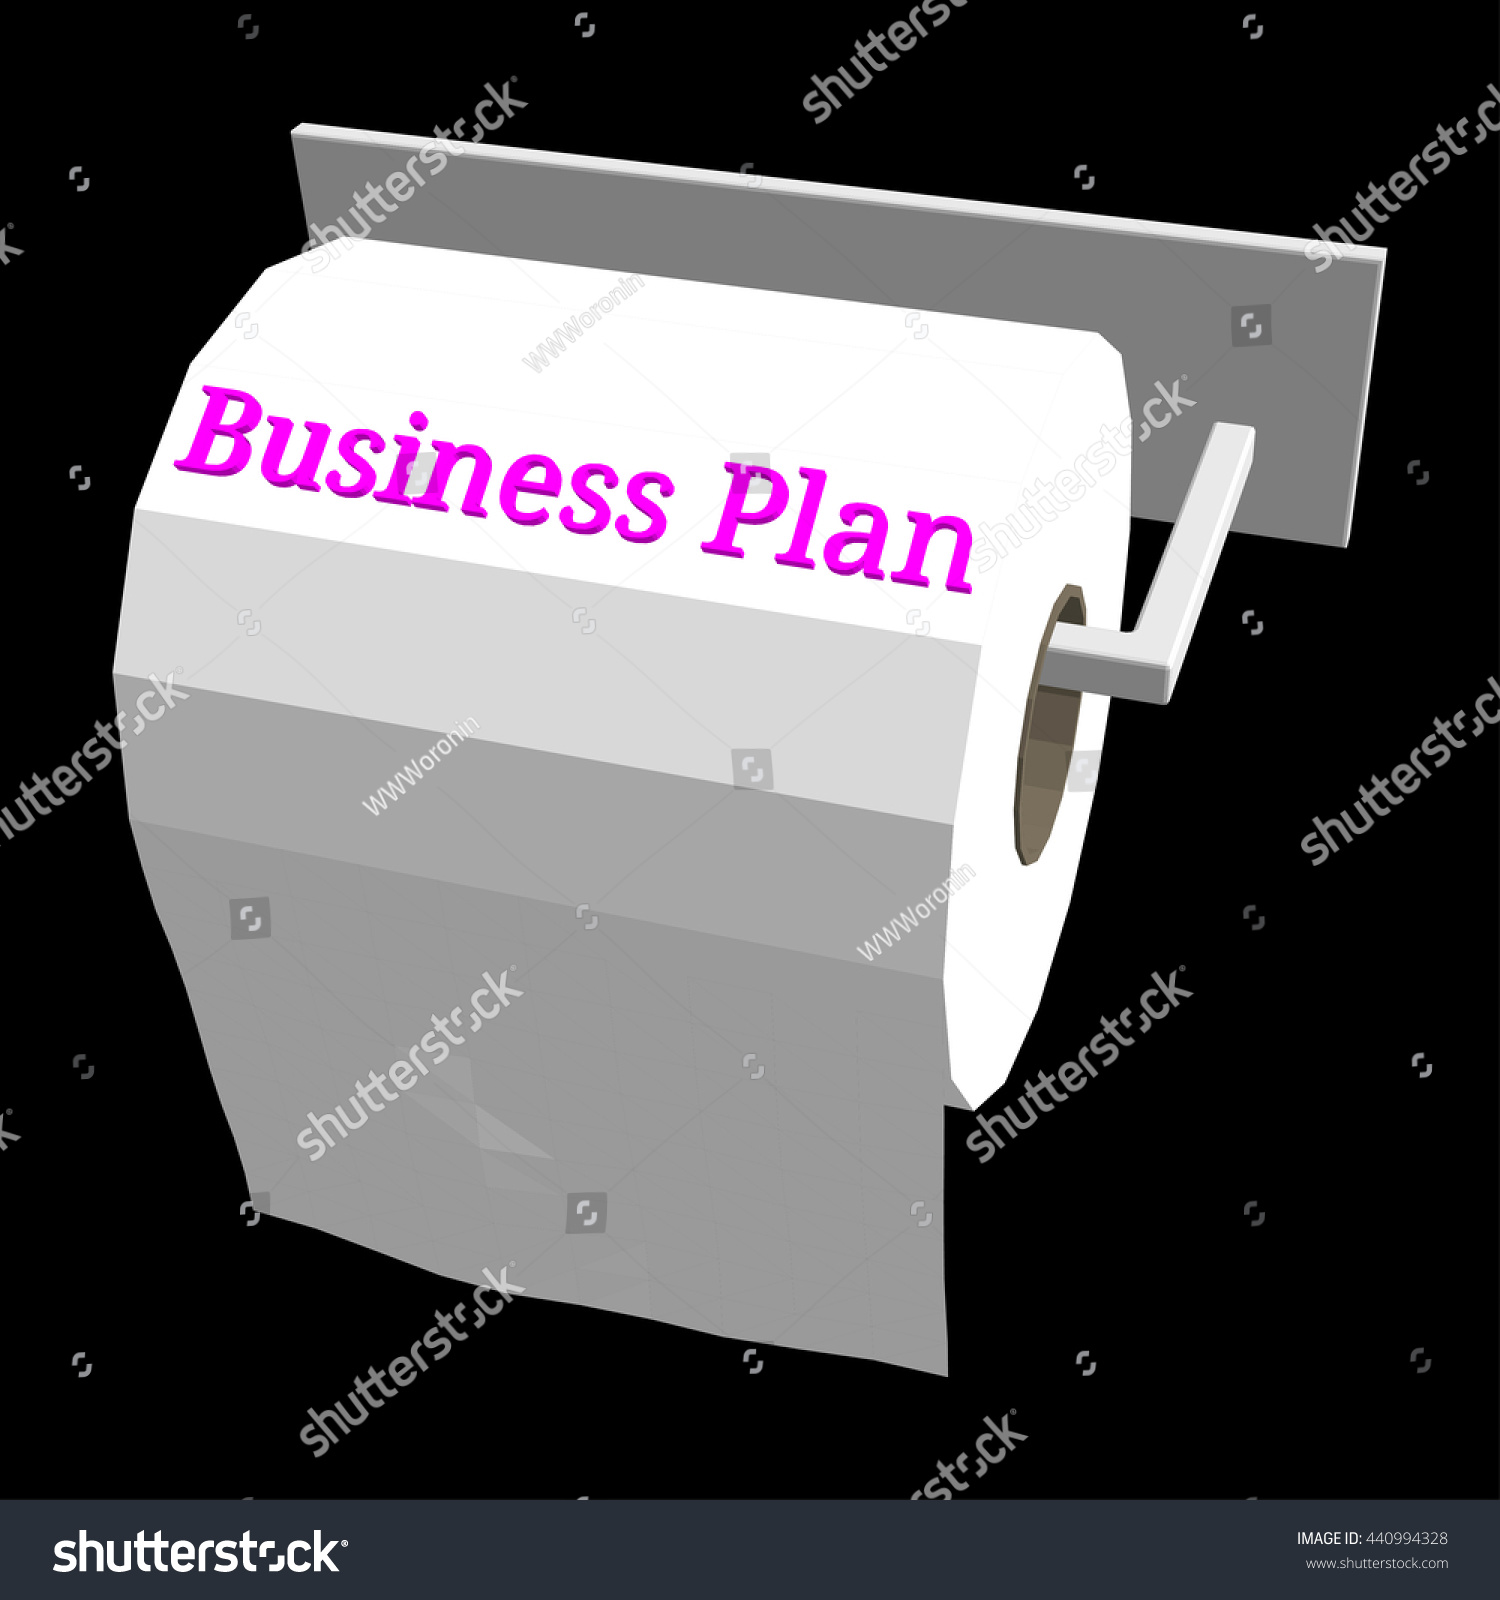 Papre collection business plan